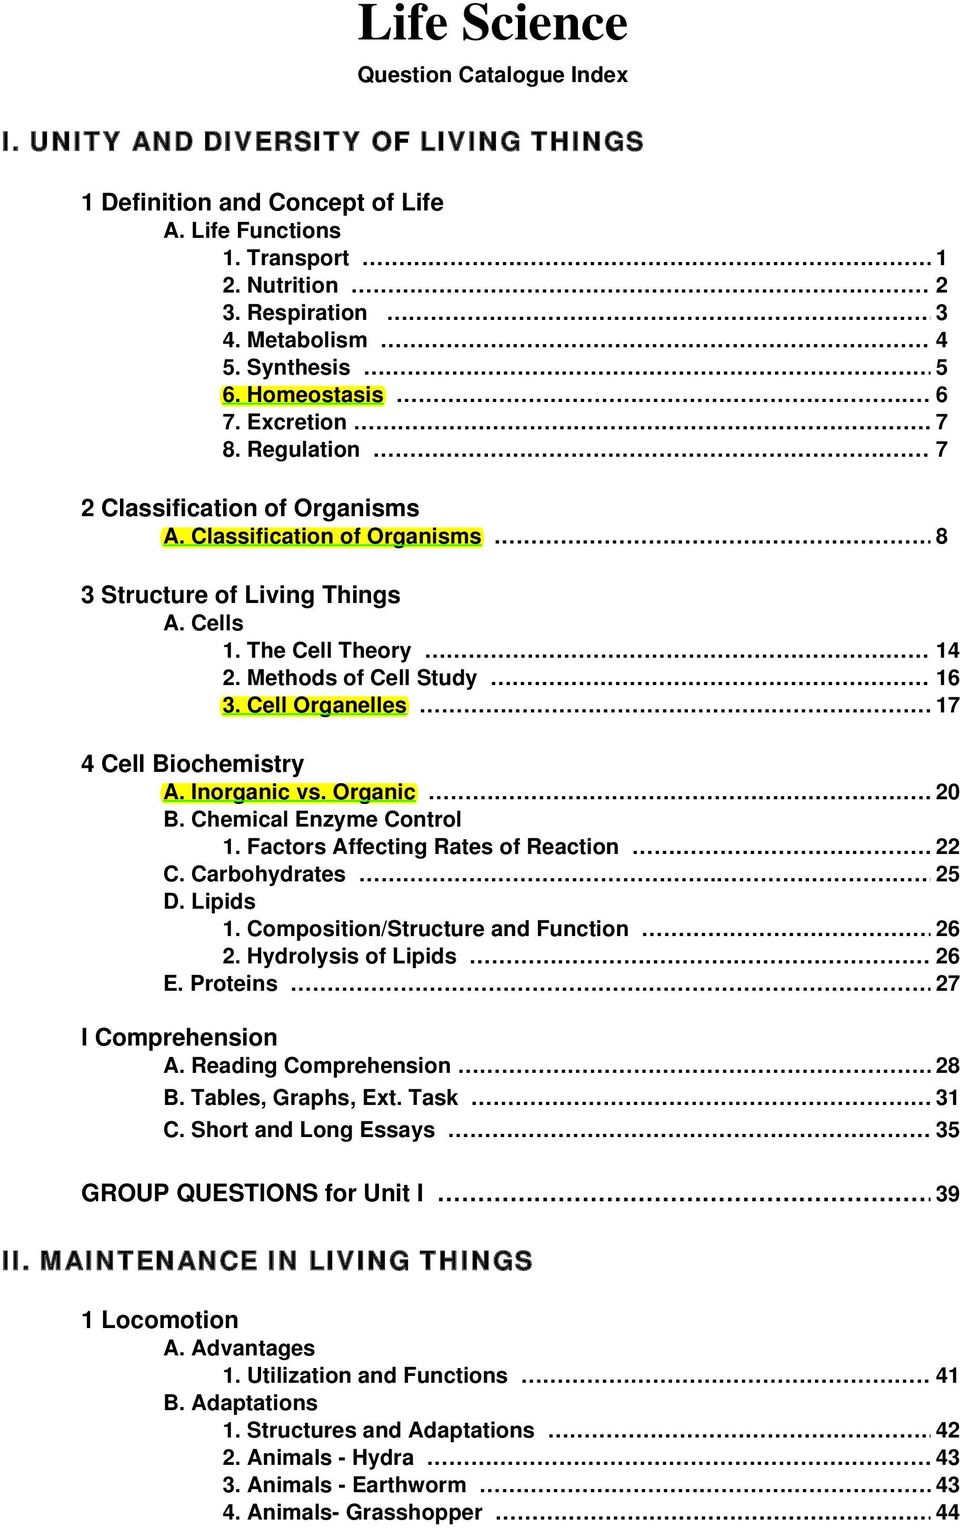 life science question catalogue index - pdf